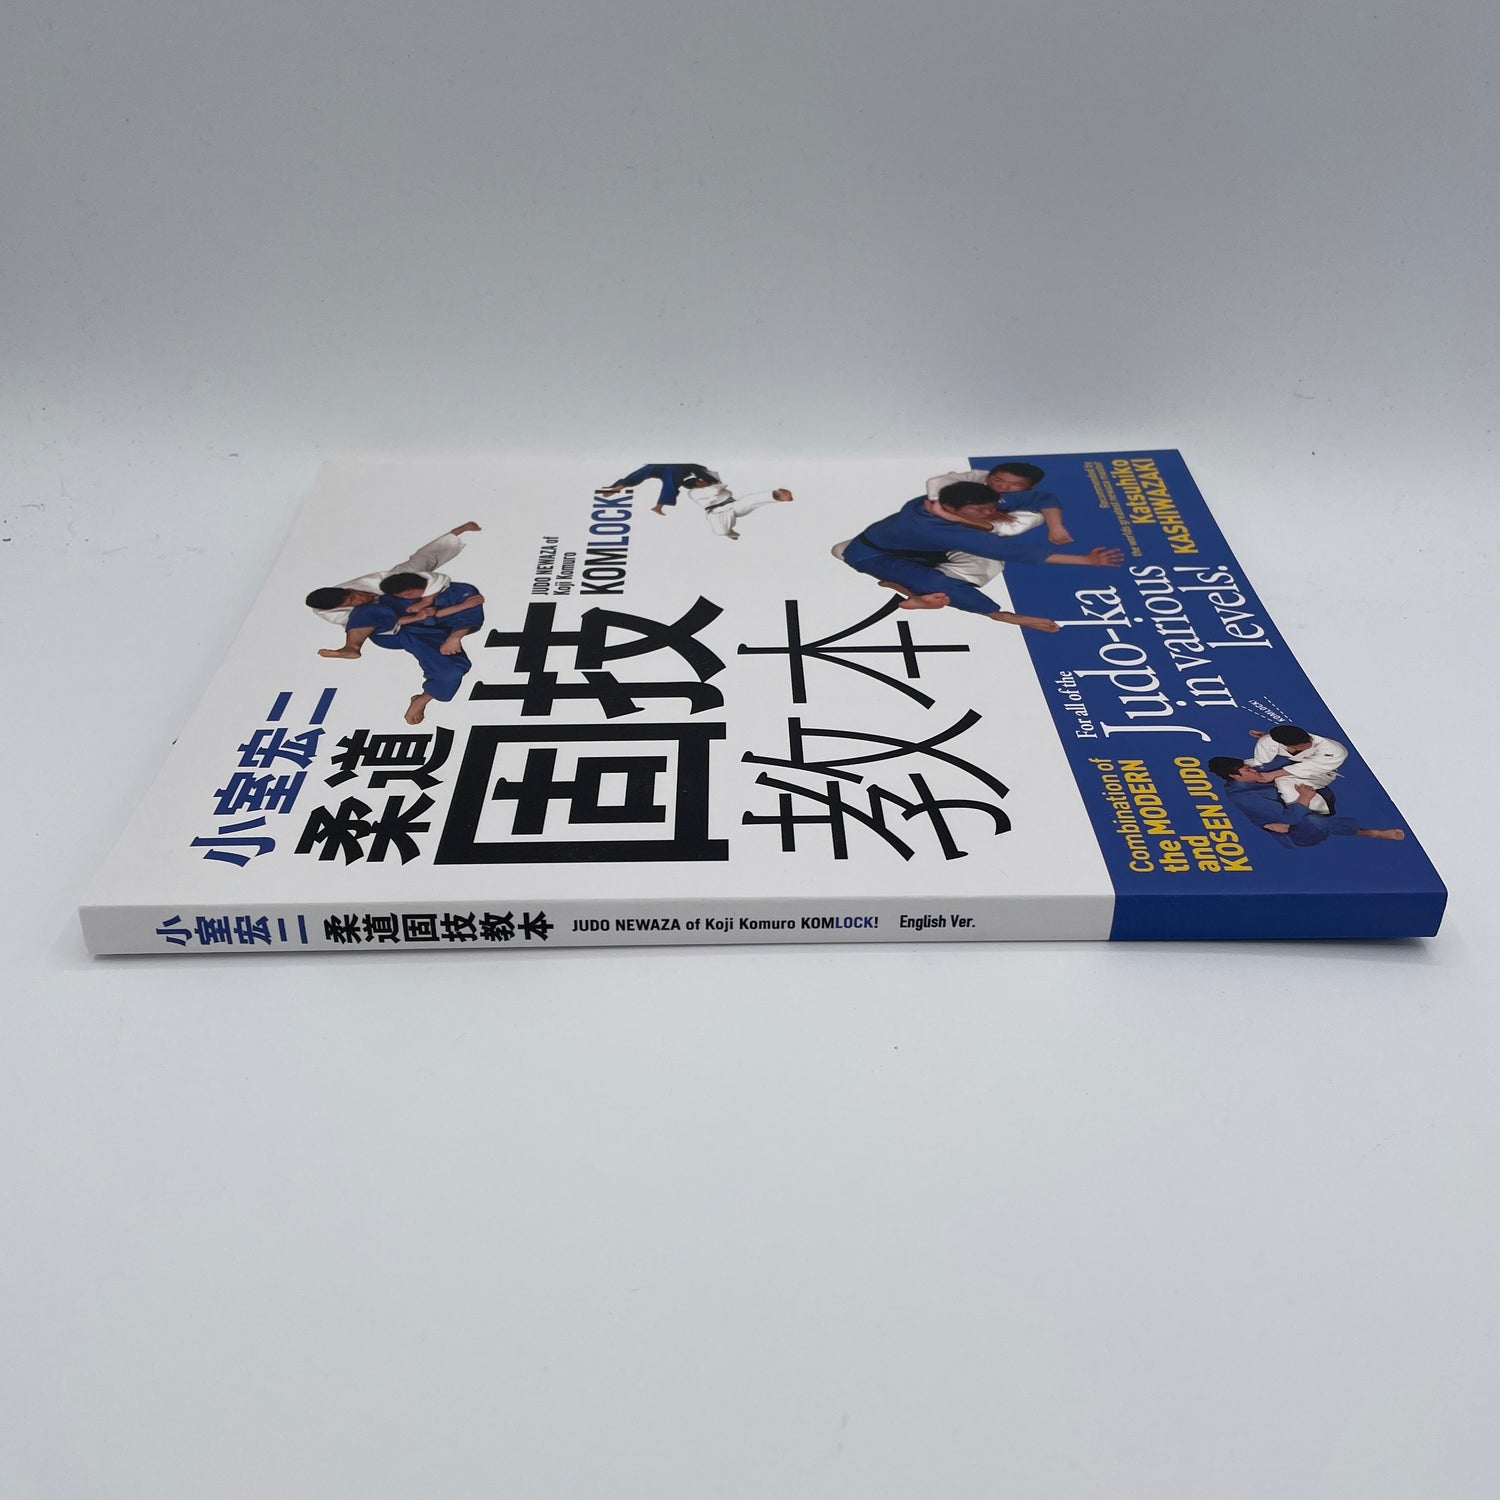 Judo Newaza of Koji Komuro Komlock Book